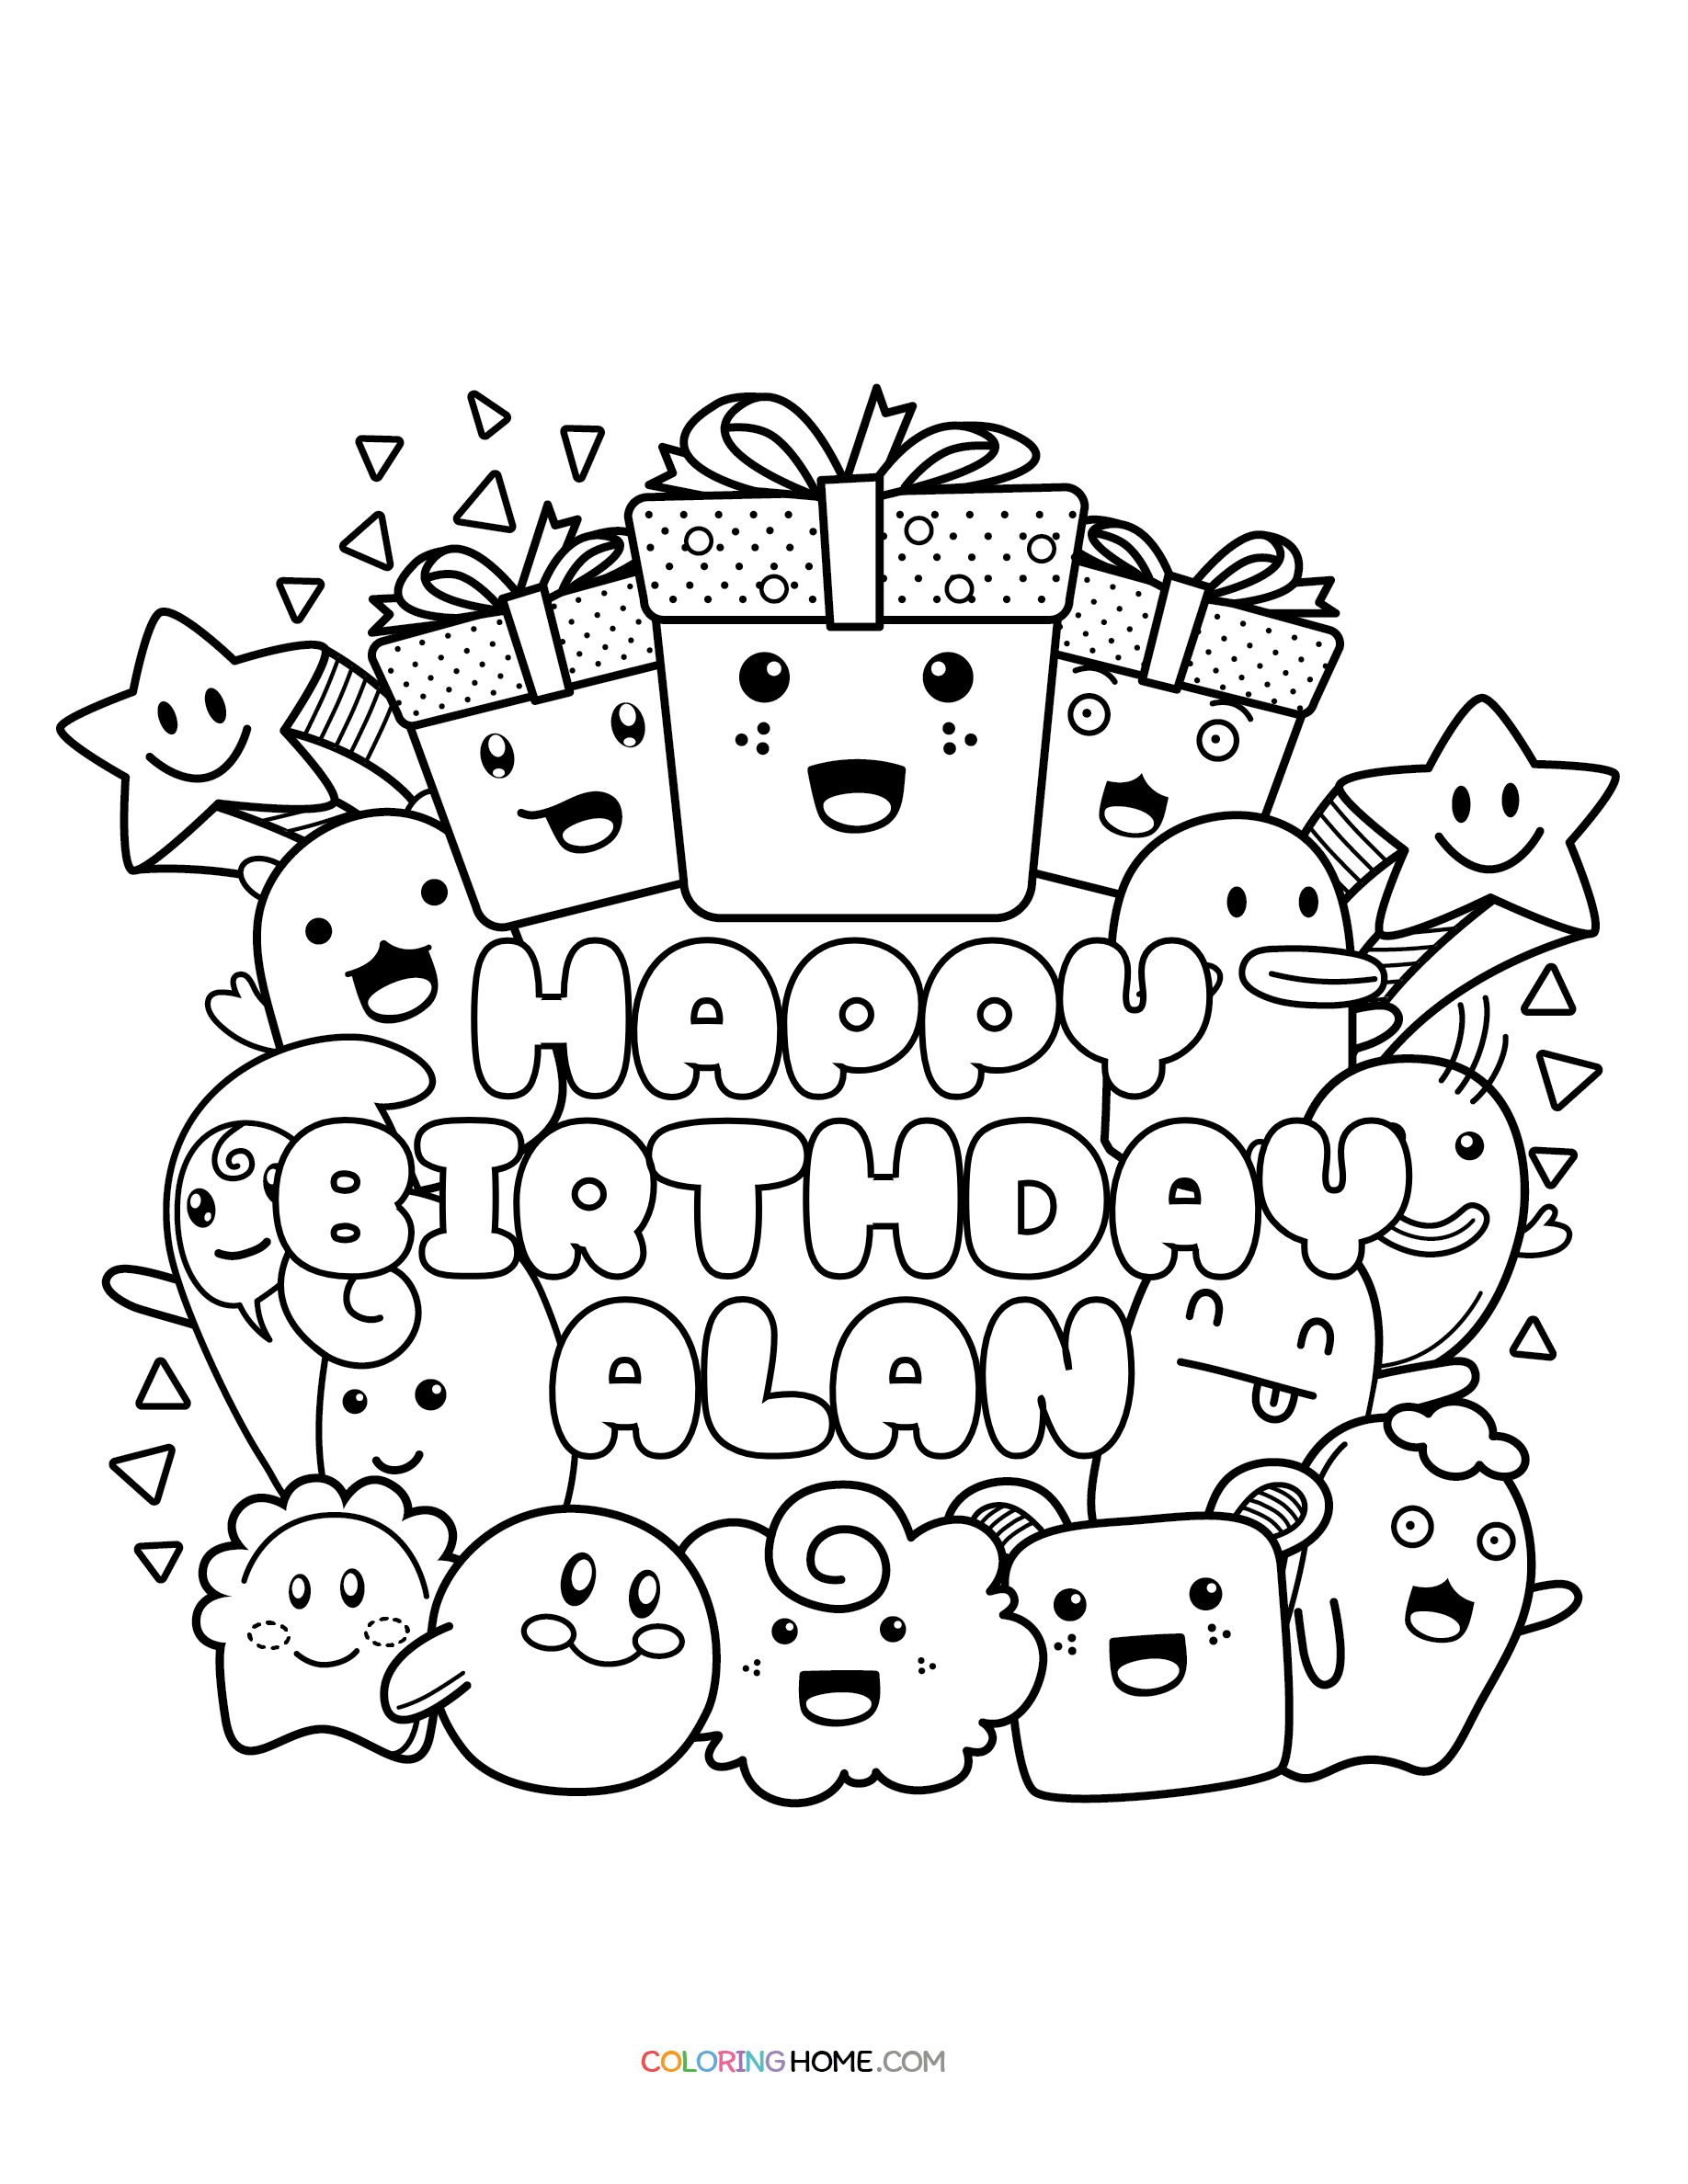 Happy Birthday Alan coloring page